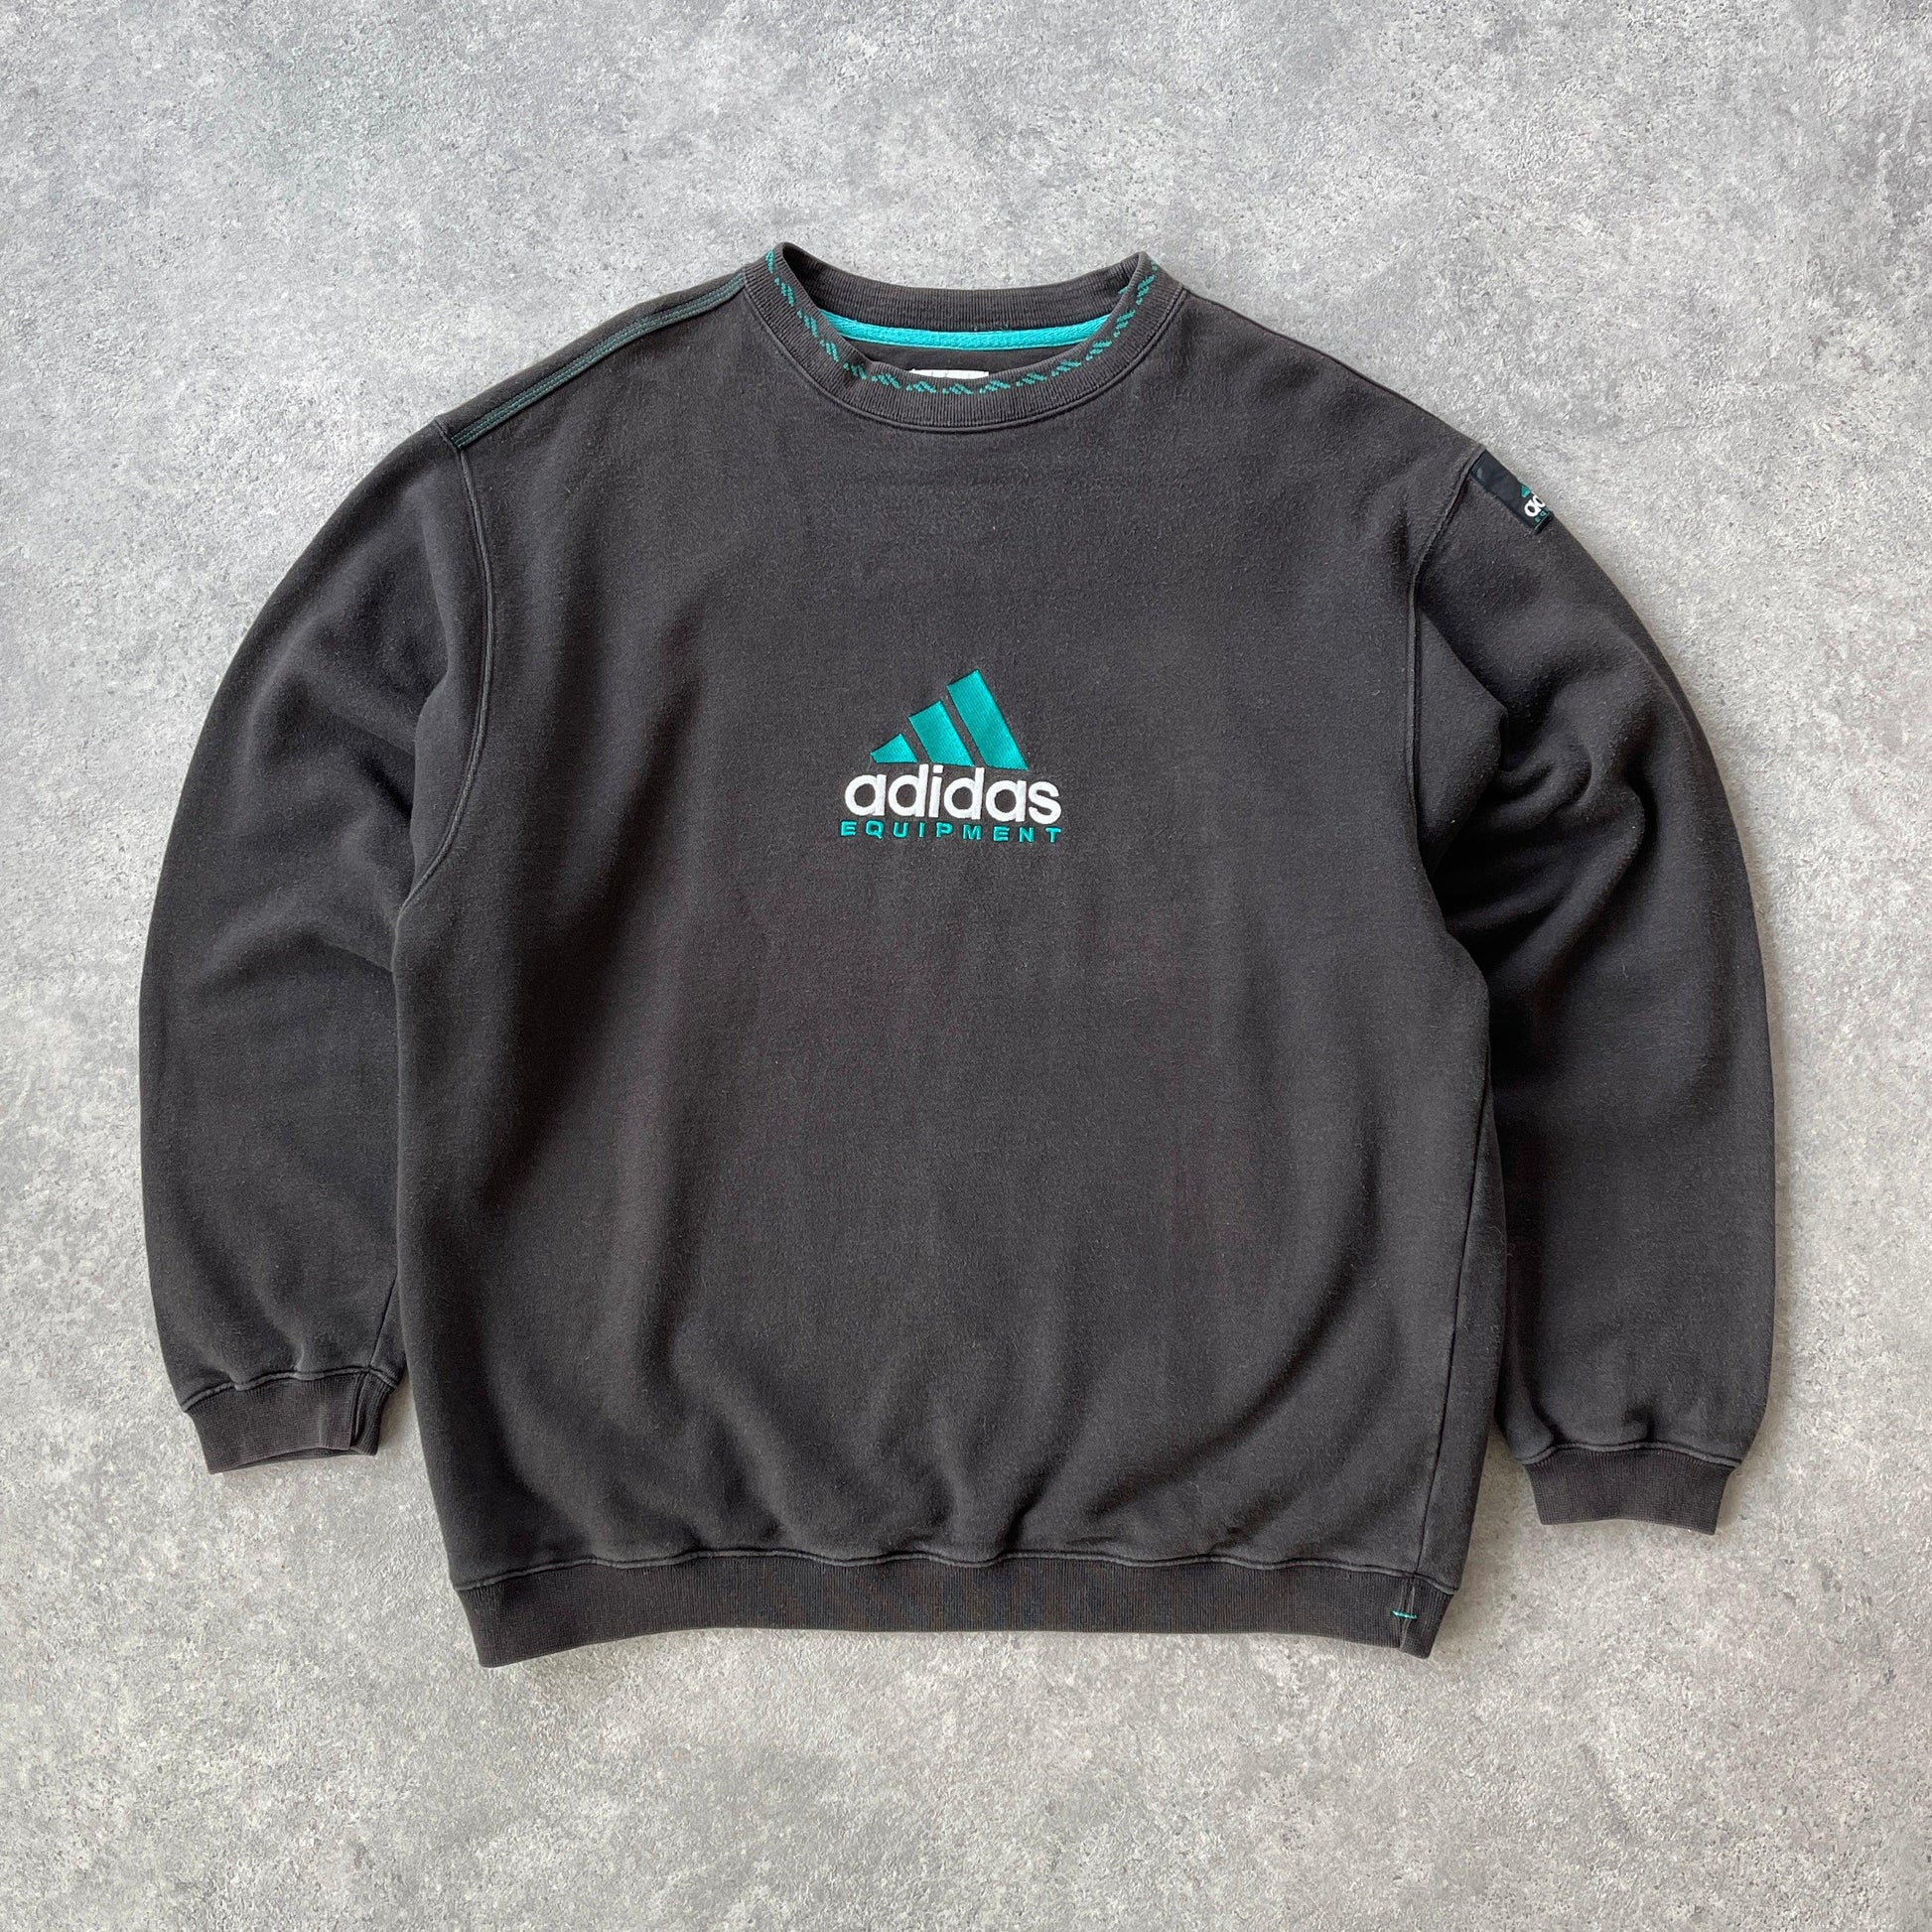 Adidas Equipment 1990s heavyweight embroidered sweatshirt (M) - Known Source